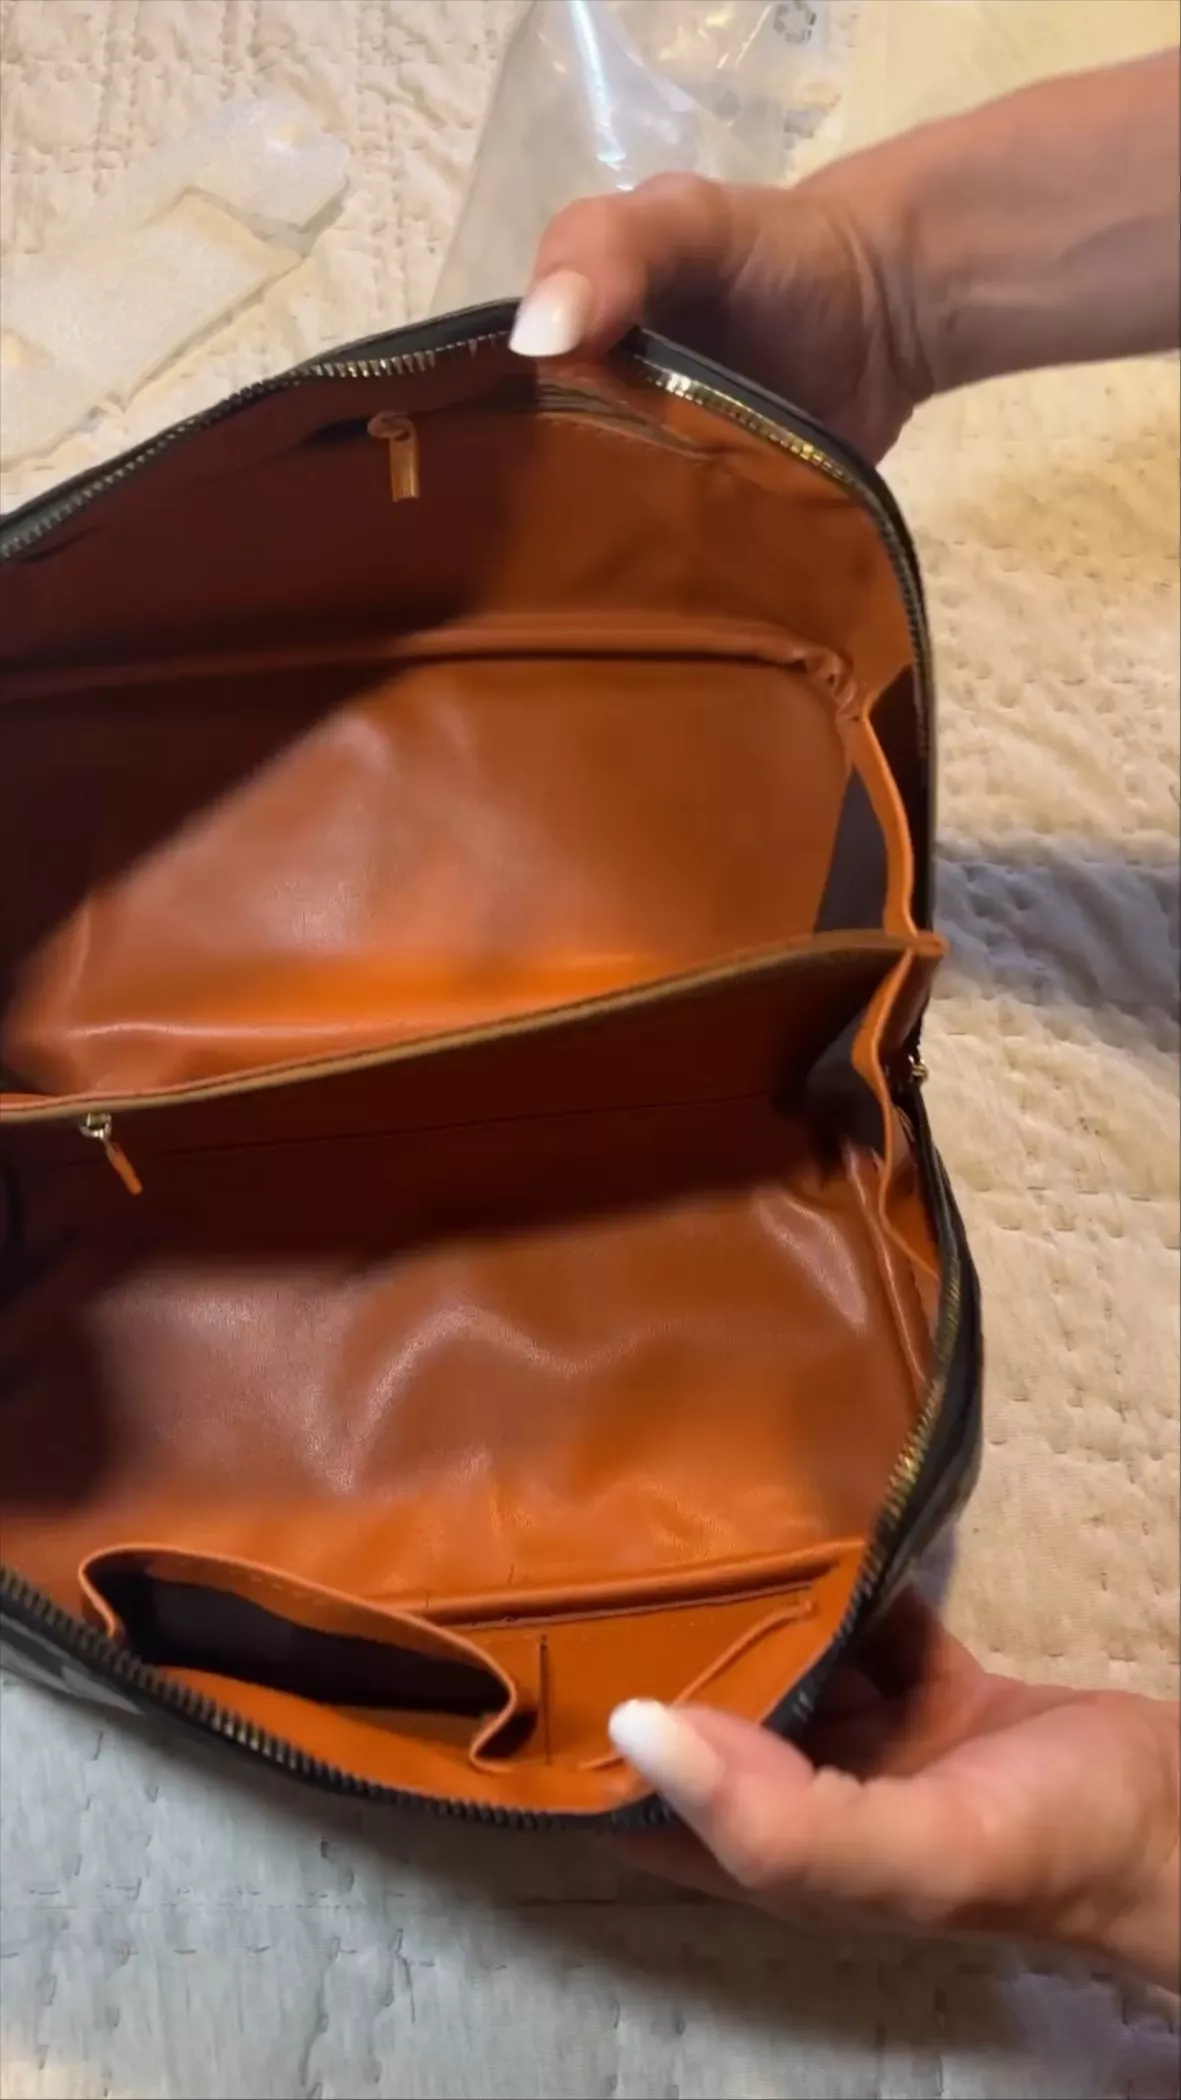  HUANLANG Travel Makeup Bag Large Capacity Travel